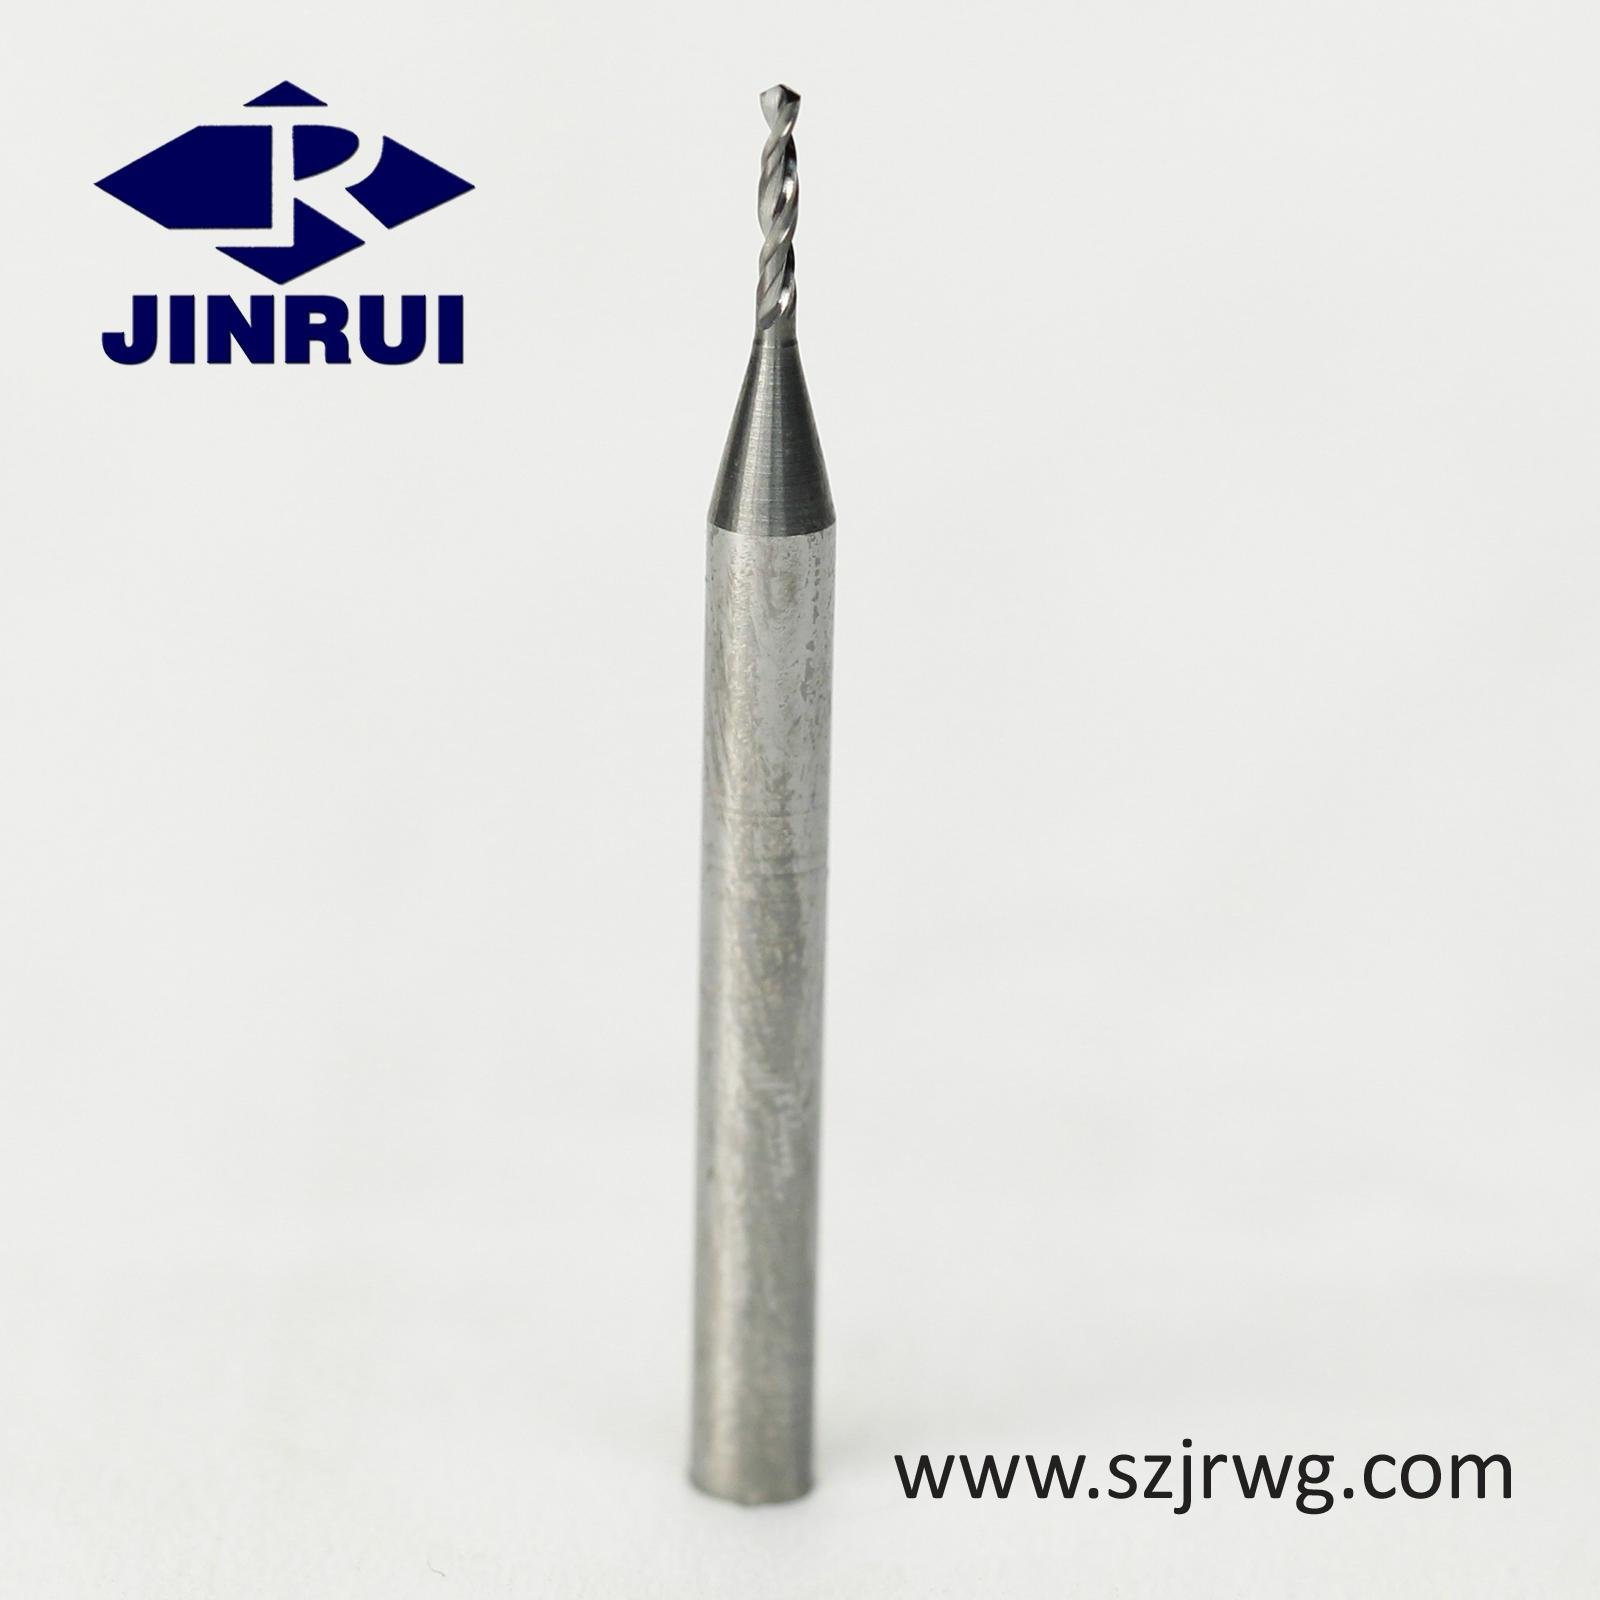 0.05 mm solid tungsten carbide drill bits 3